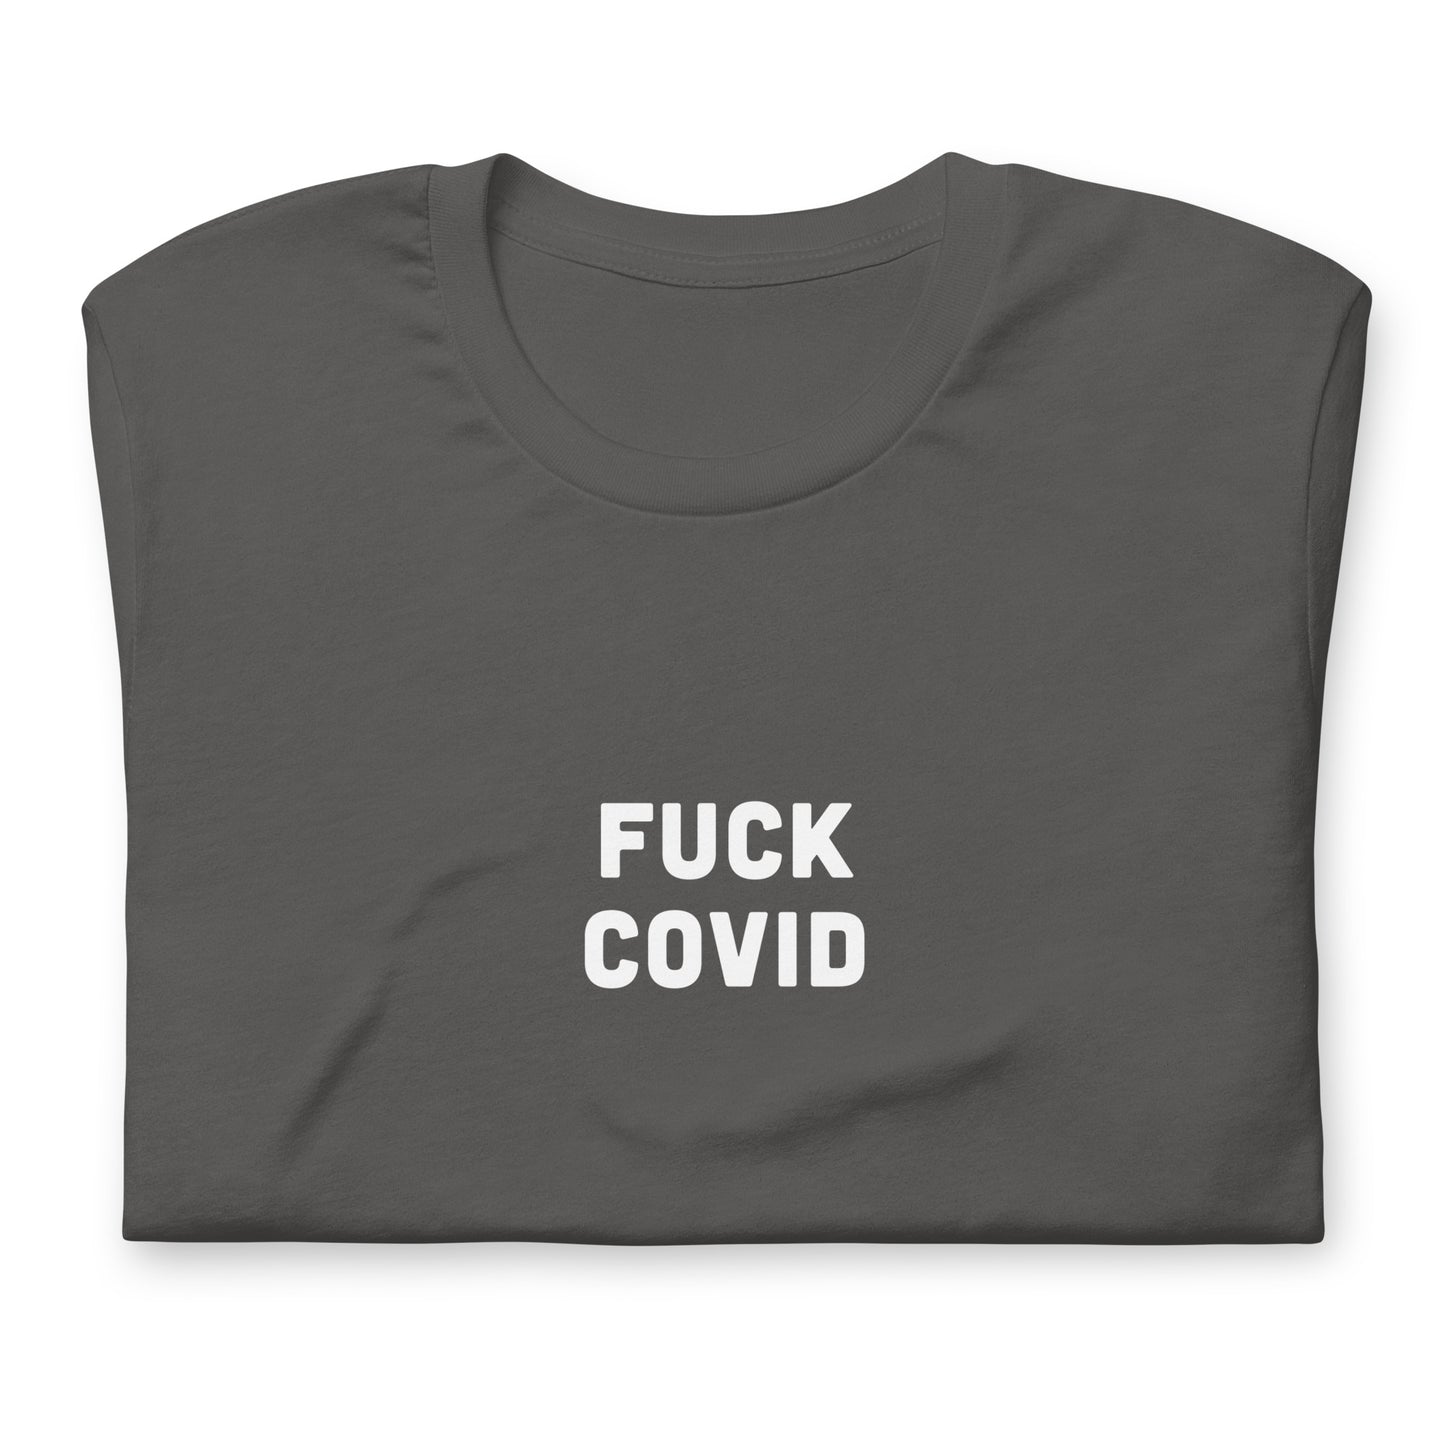 Fuck Covid T-Shirt Size 2XL Color Black